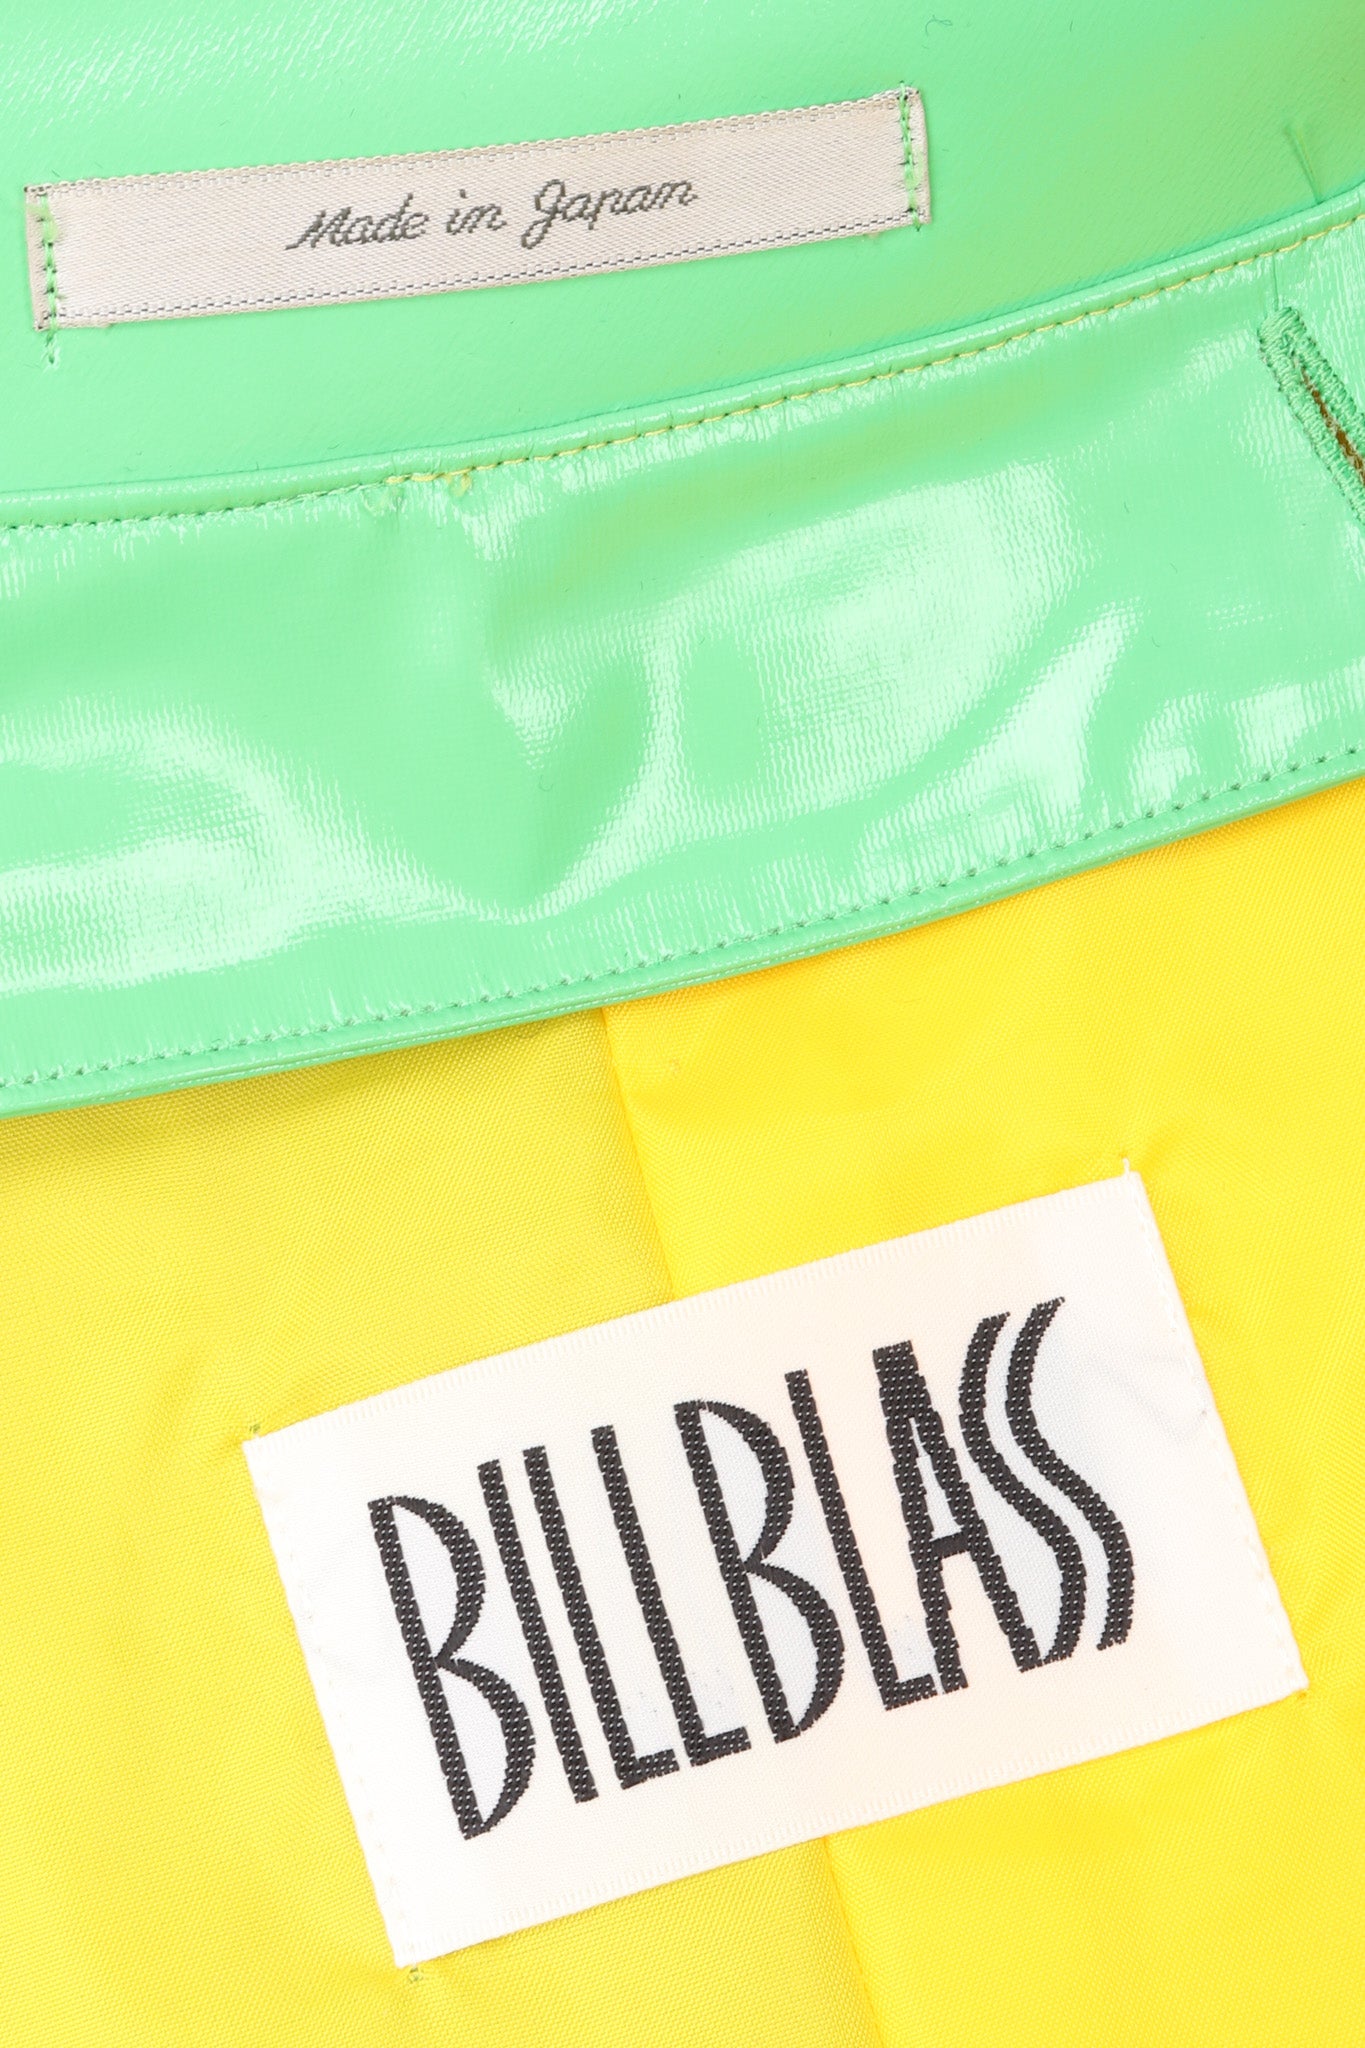 Recess Los Angeles Vintage Bill Blass Rainbow Cross Colors Colorblock Glossy Swing Rain Coat